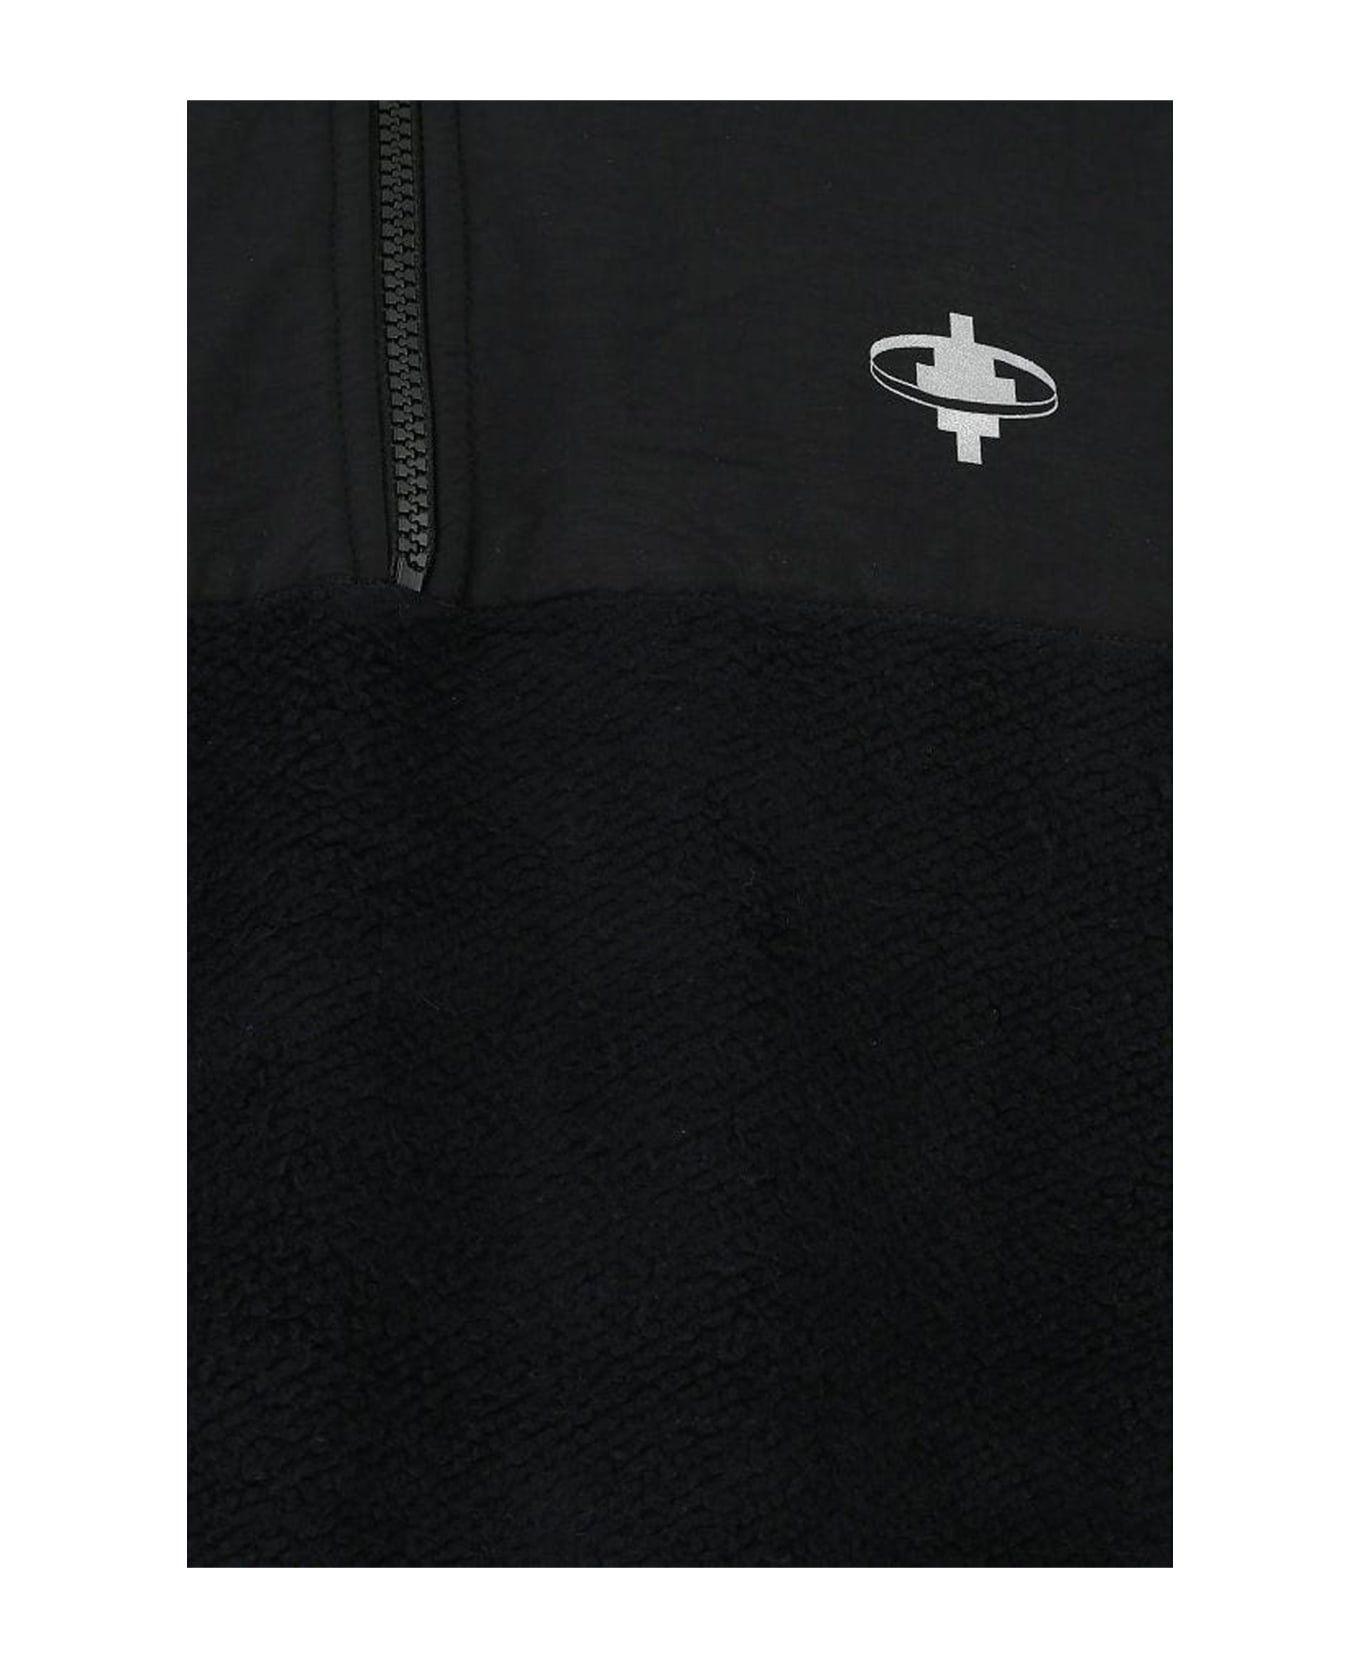 Marcelo Burlon County Of Milan Zp Up Sweatshirt - Black